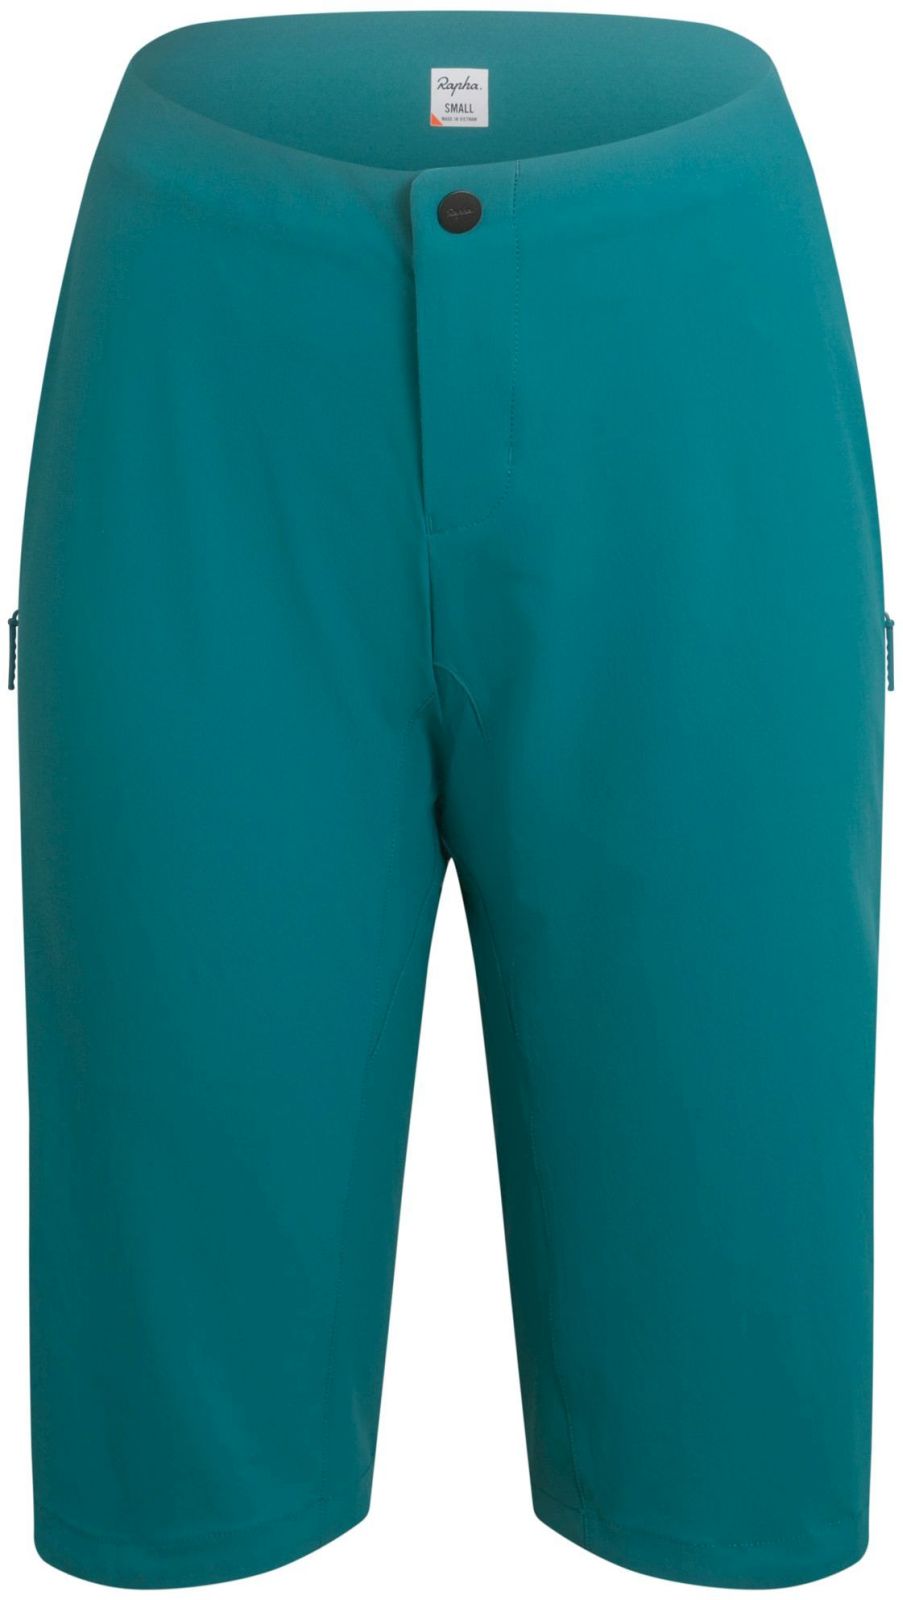 E-shop Rapha Women's Trail Shorts - blue green/egg shell L